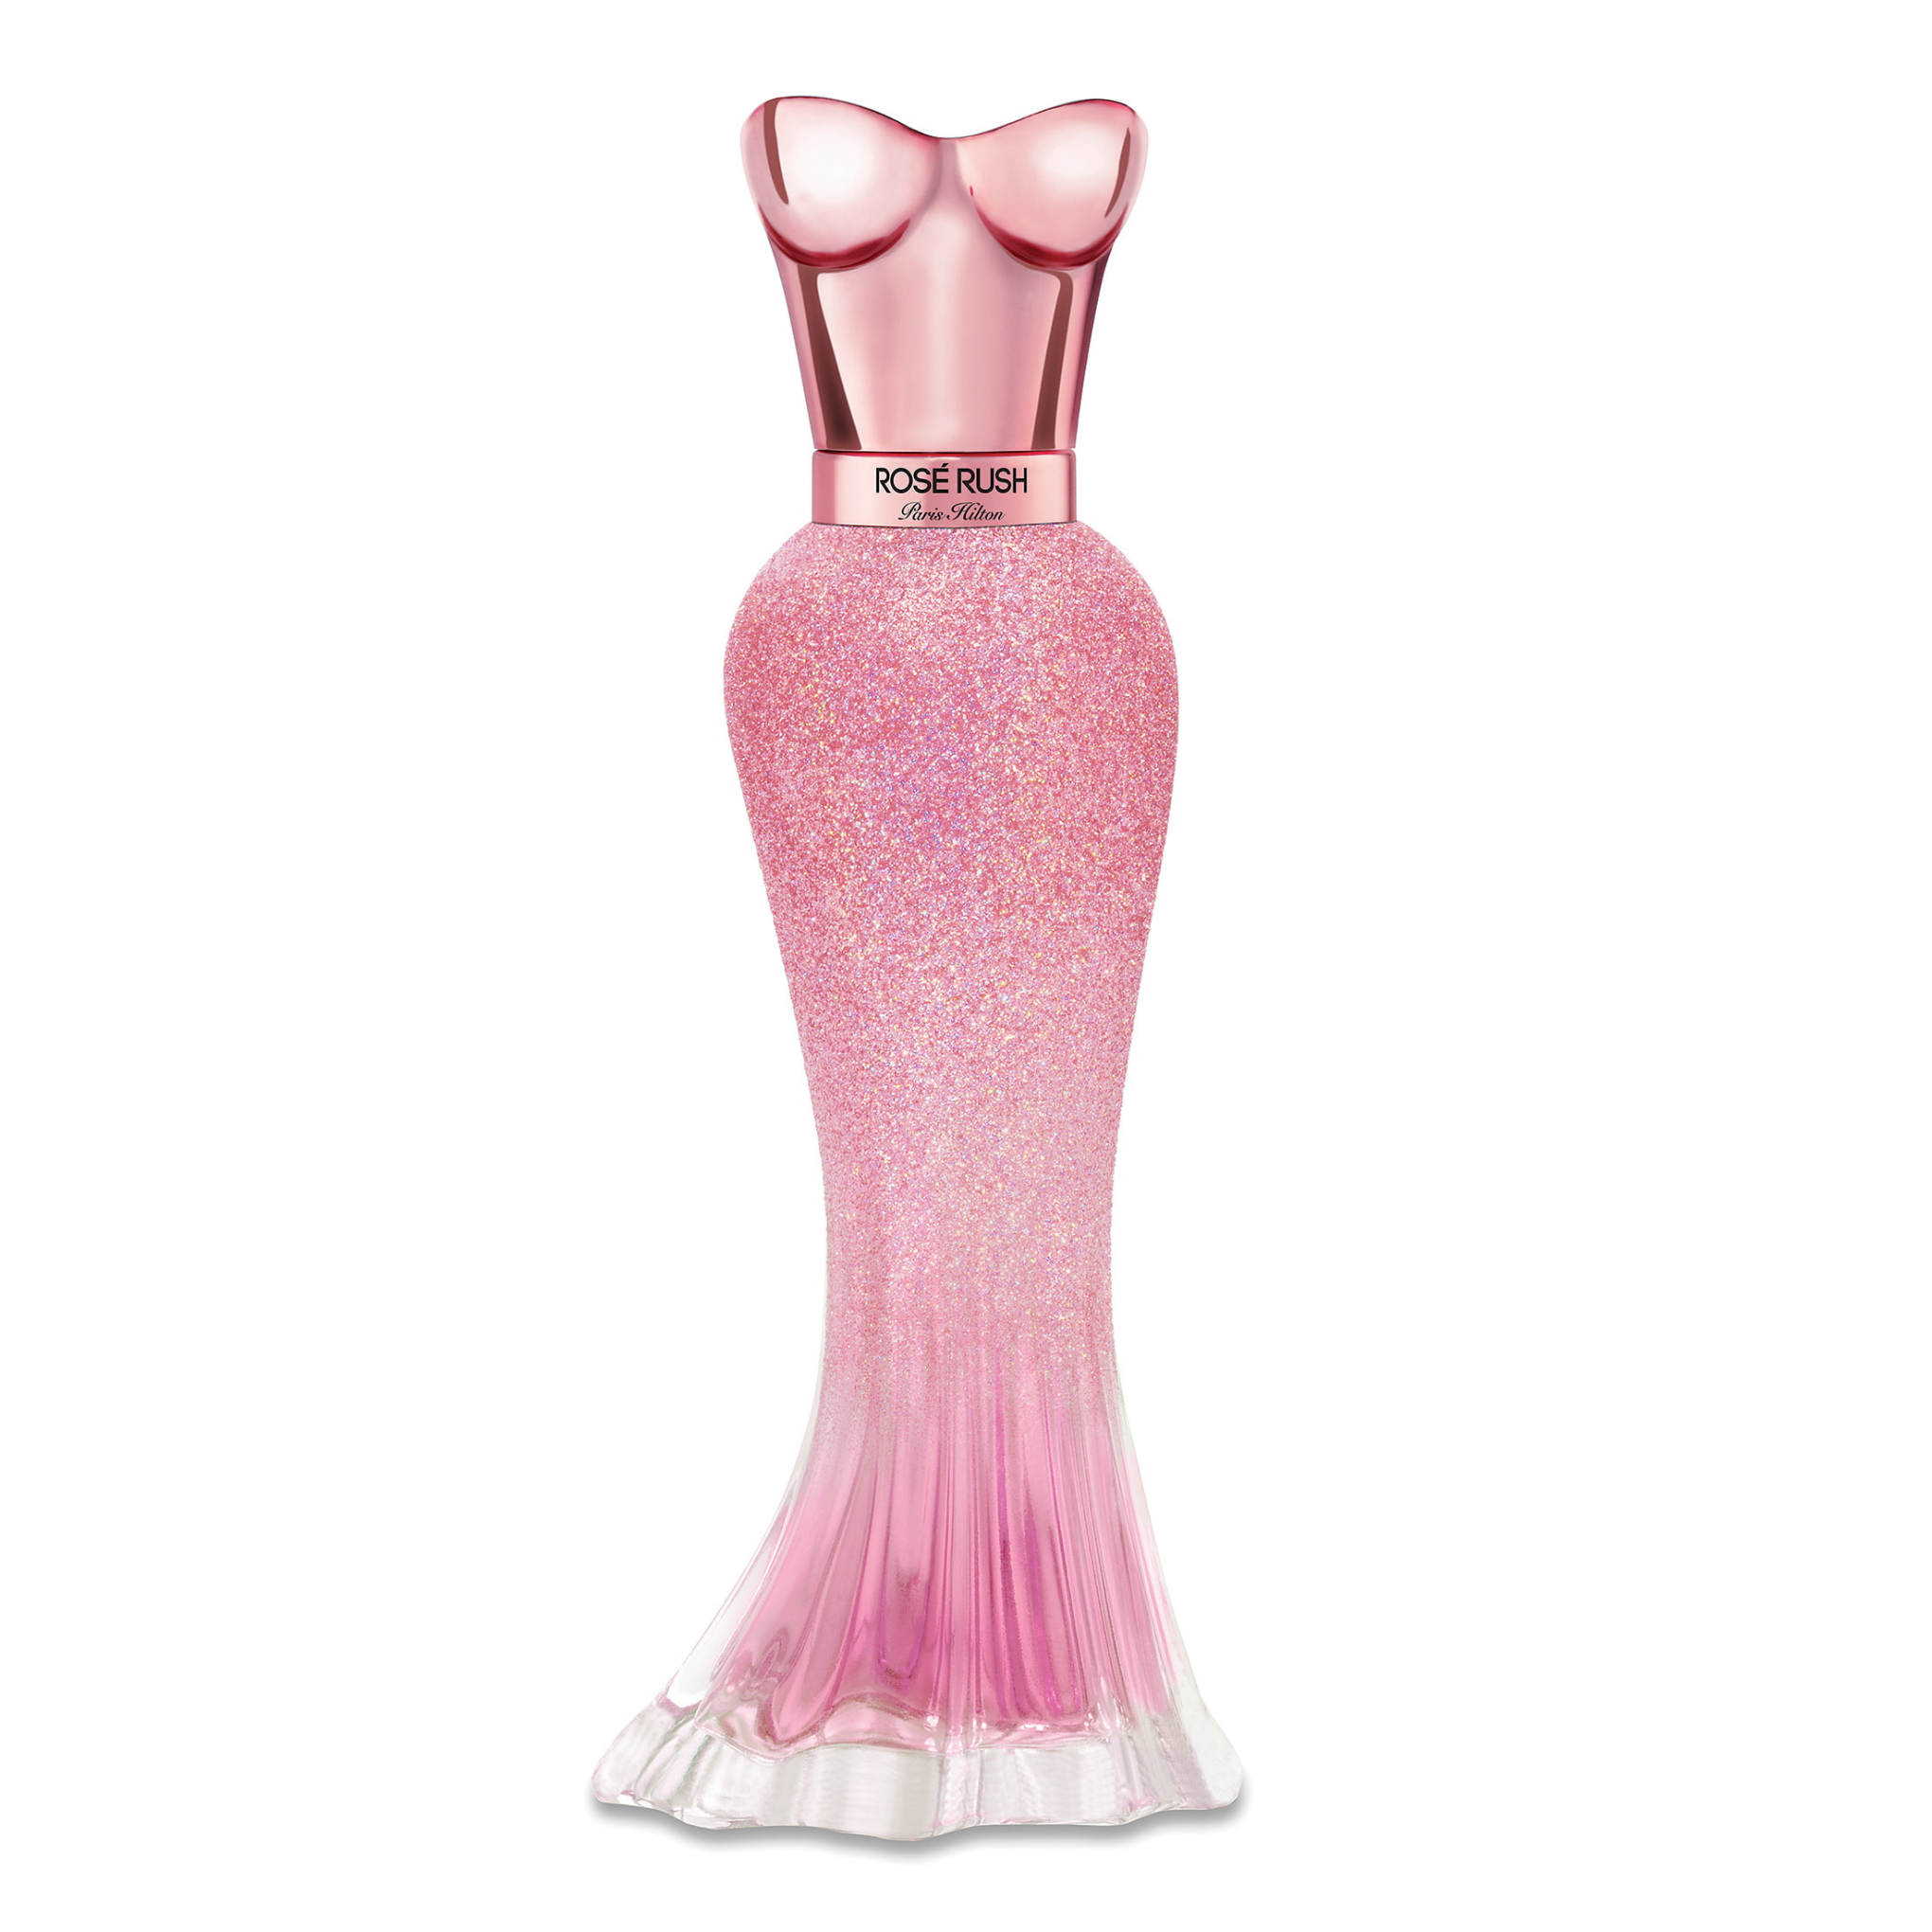 Rose Rush By Paris Hilton Eau de Parfum Spray